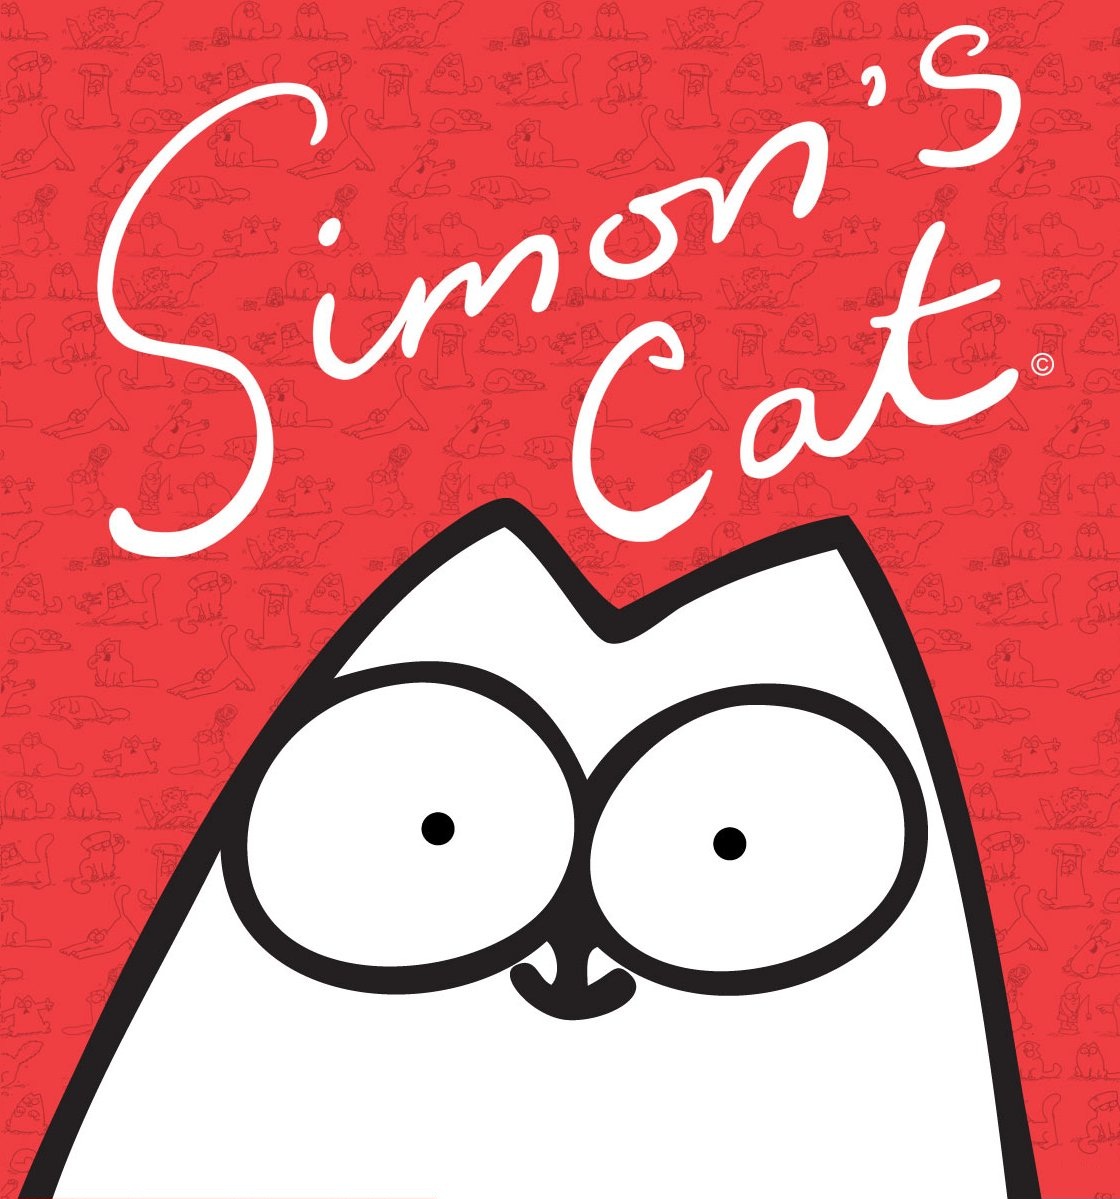   - (Simon's Cat)